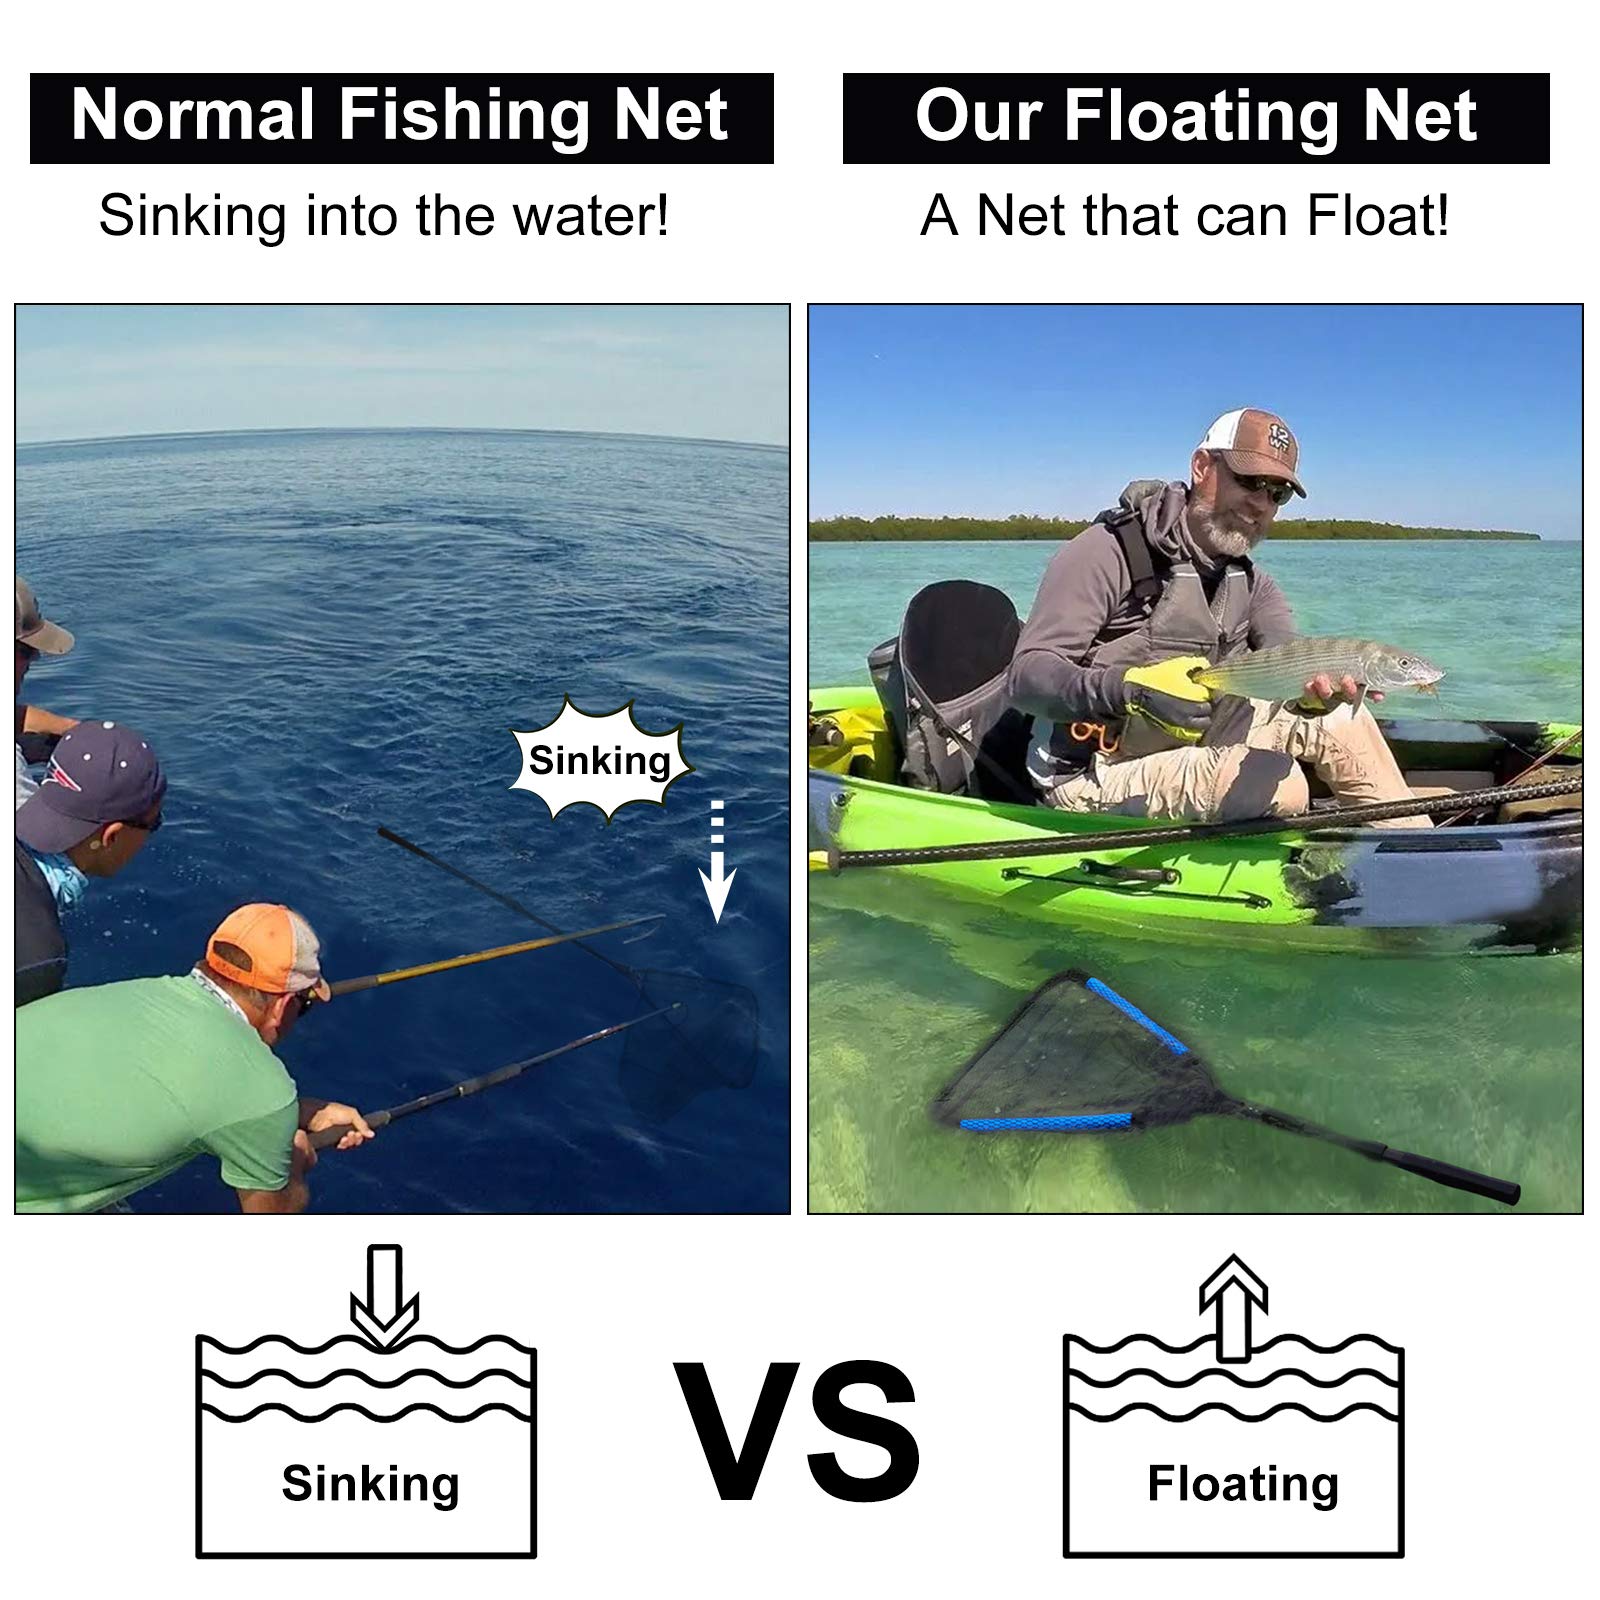 Floating Fishing-Net Rubber Coated Landing Net Pole Easy